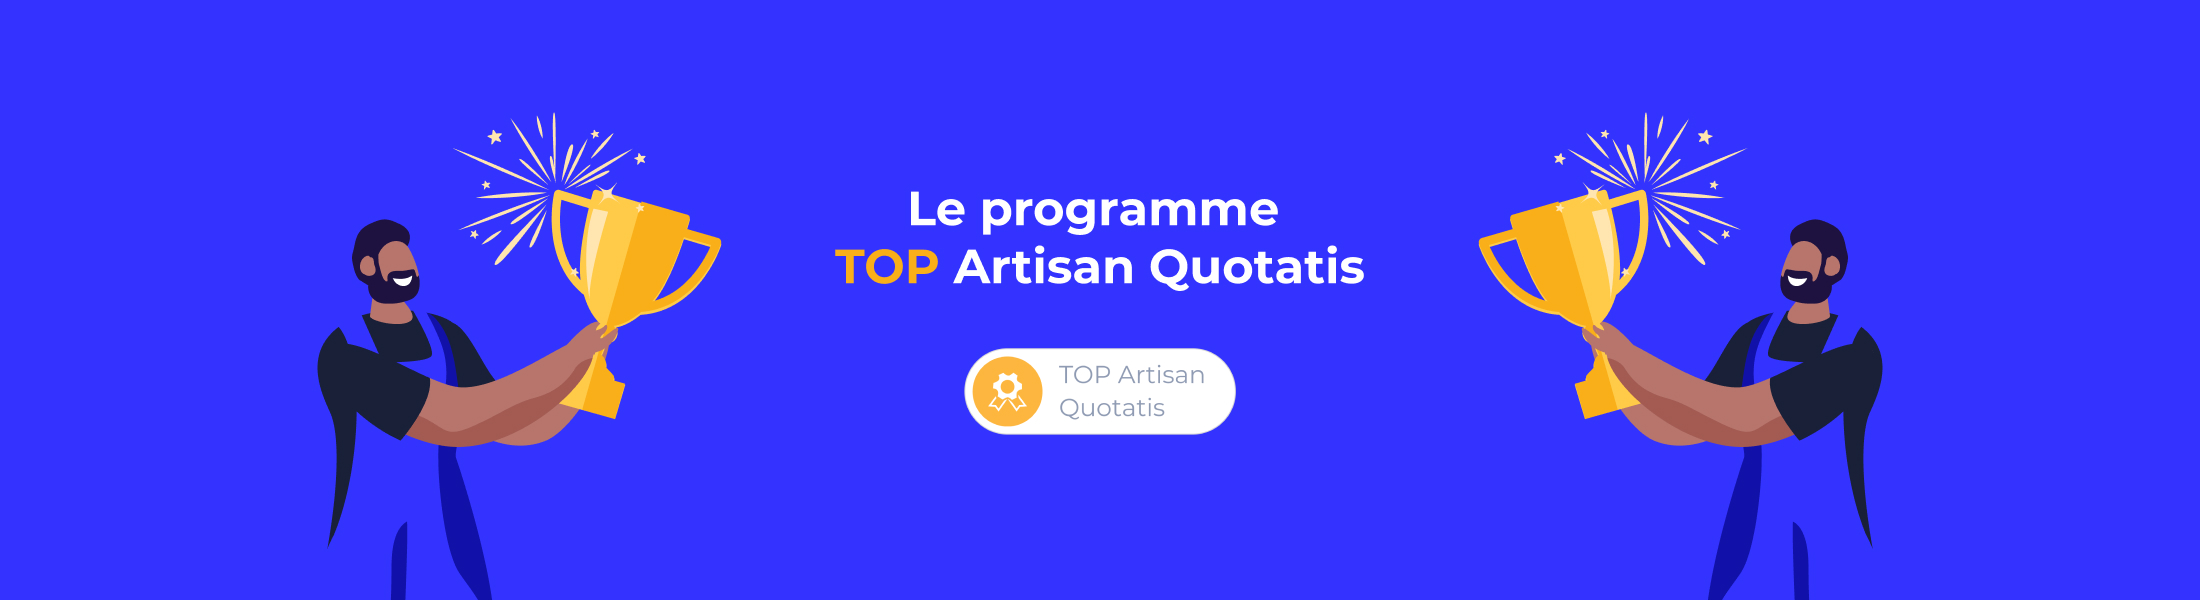 Le programme TOP Artisan Quotatis